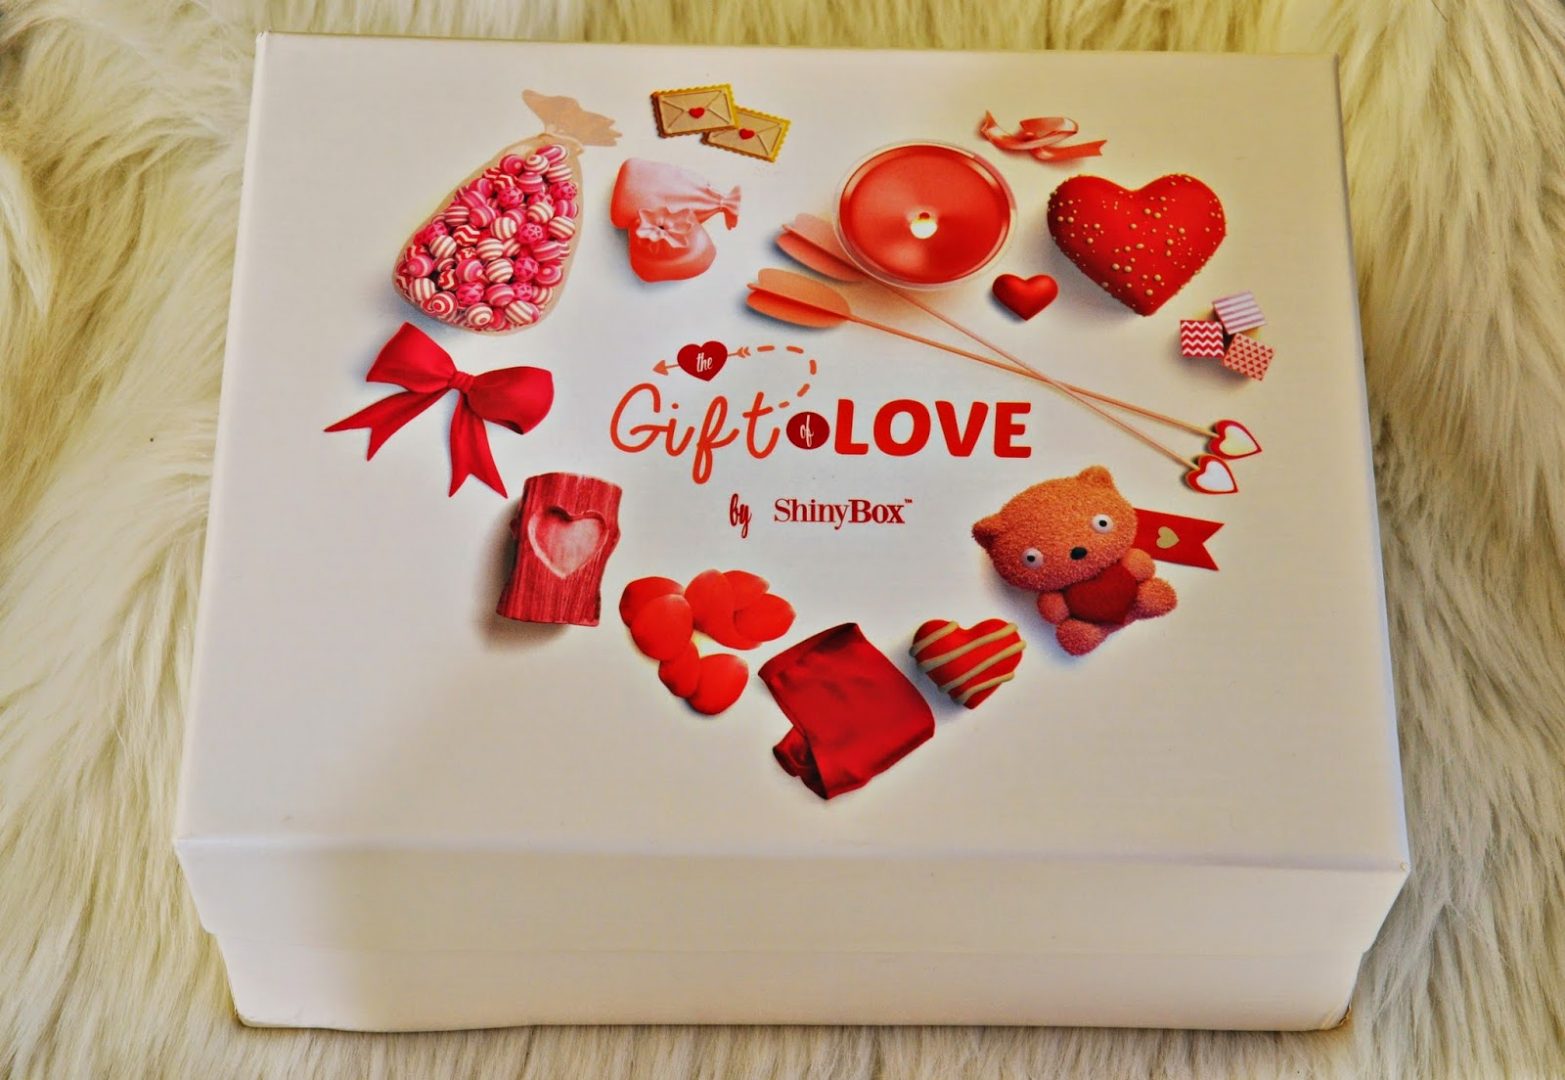 Shinybox: Gift of love.